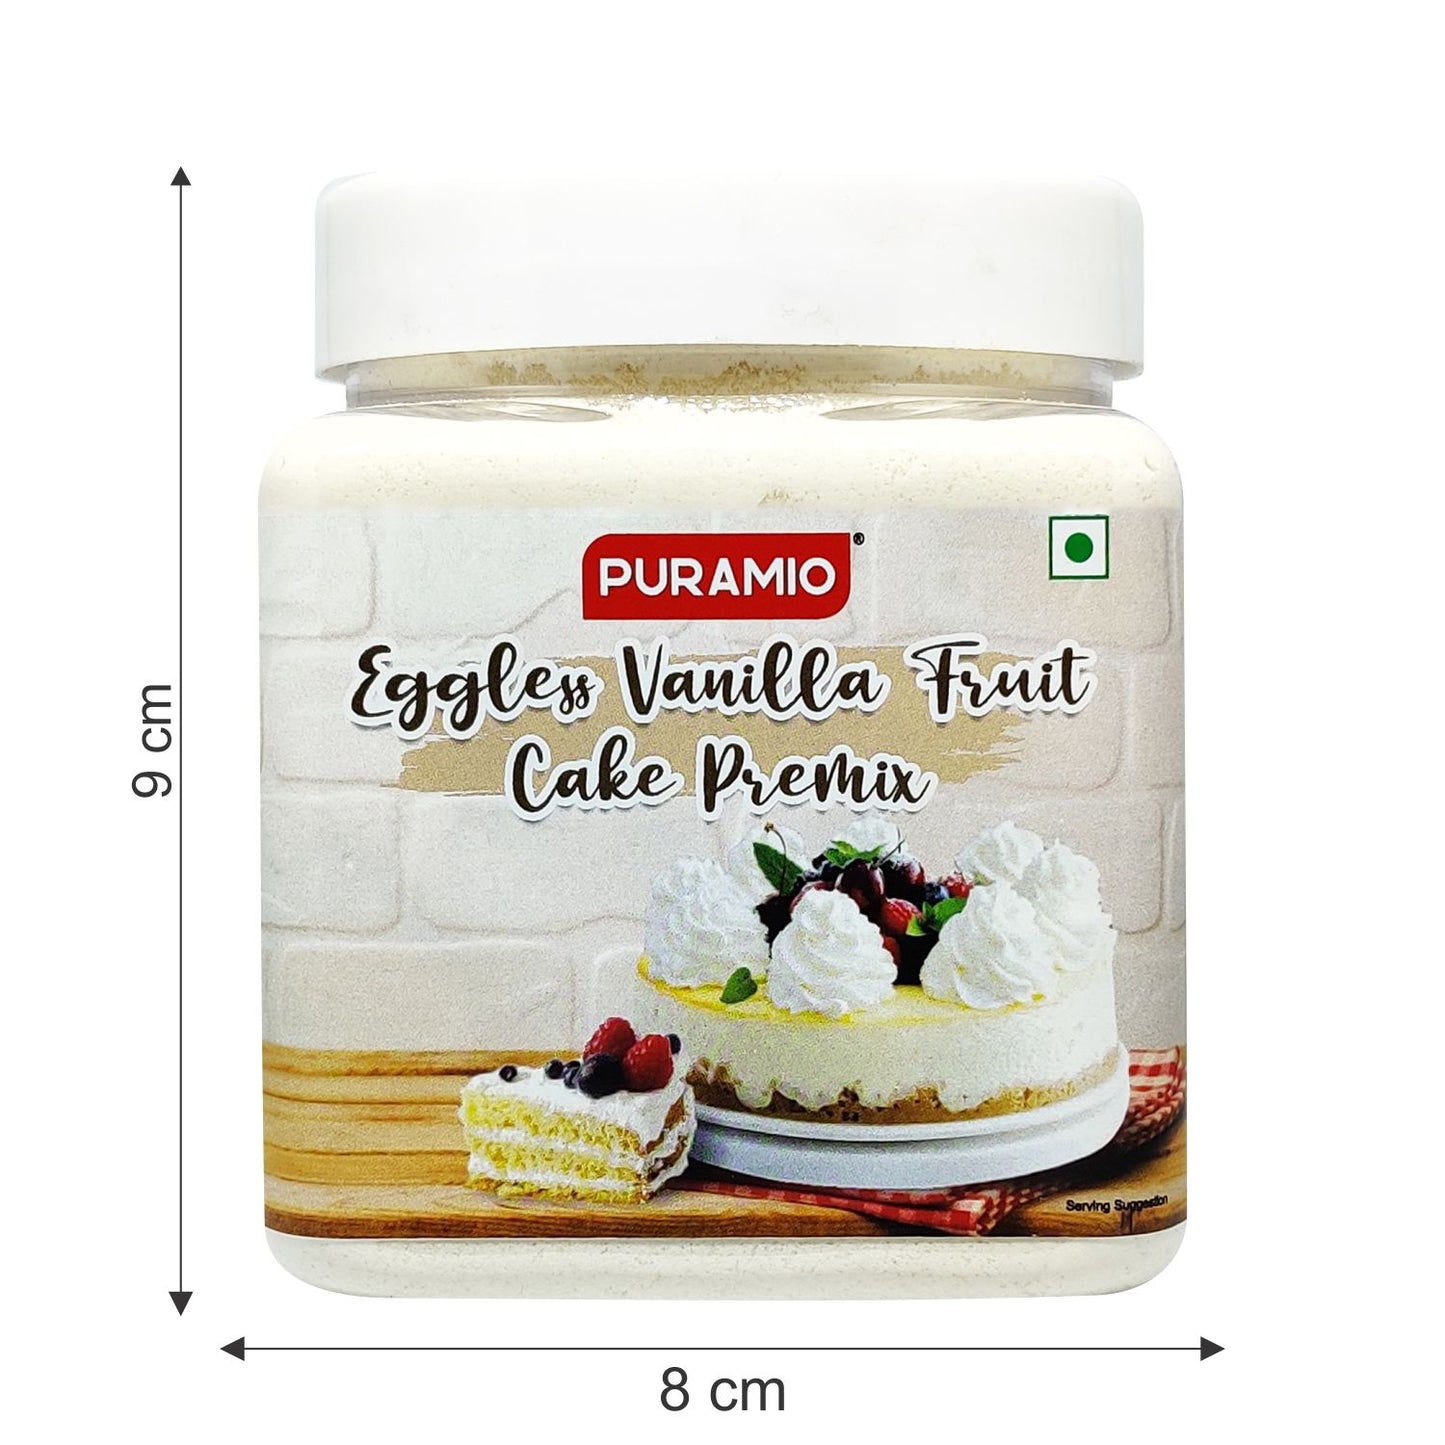 Puramio Eggless Vanilla Fruit Cake Premix